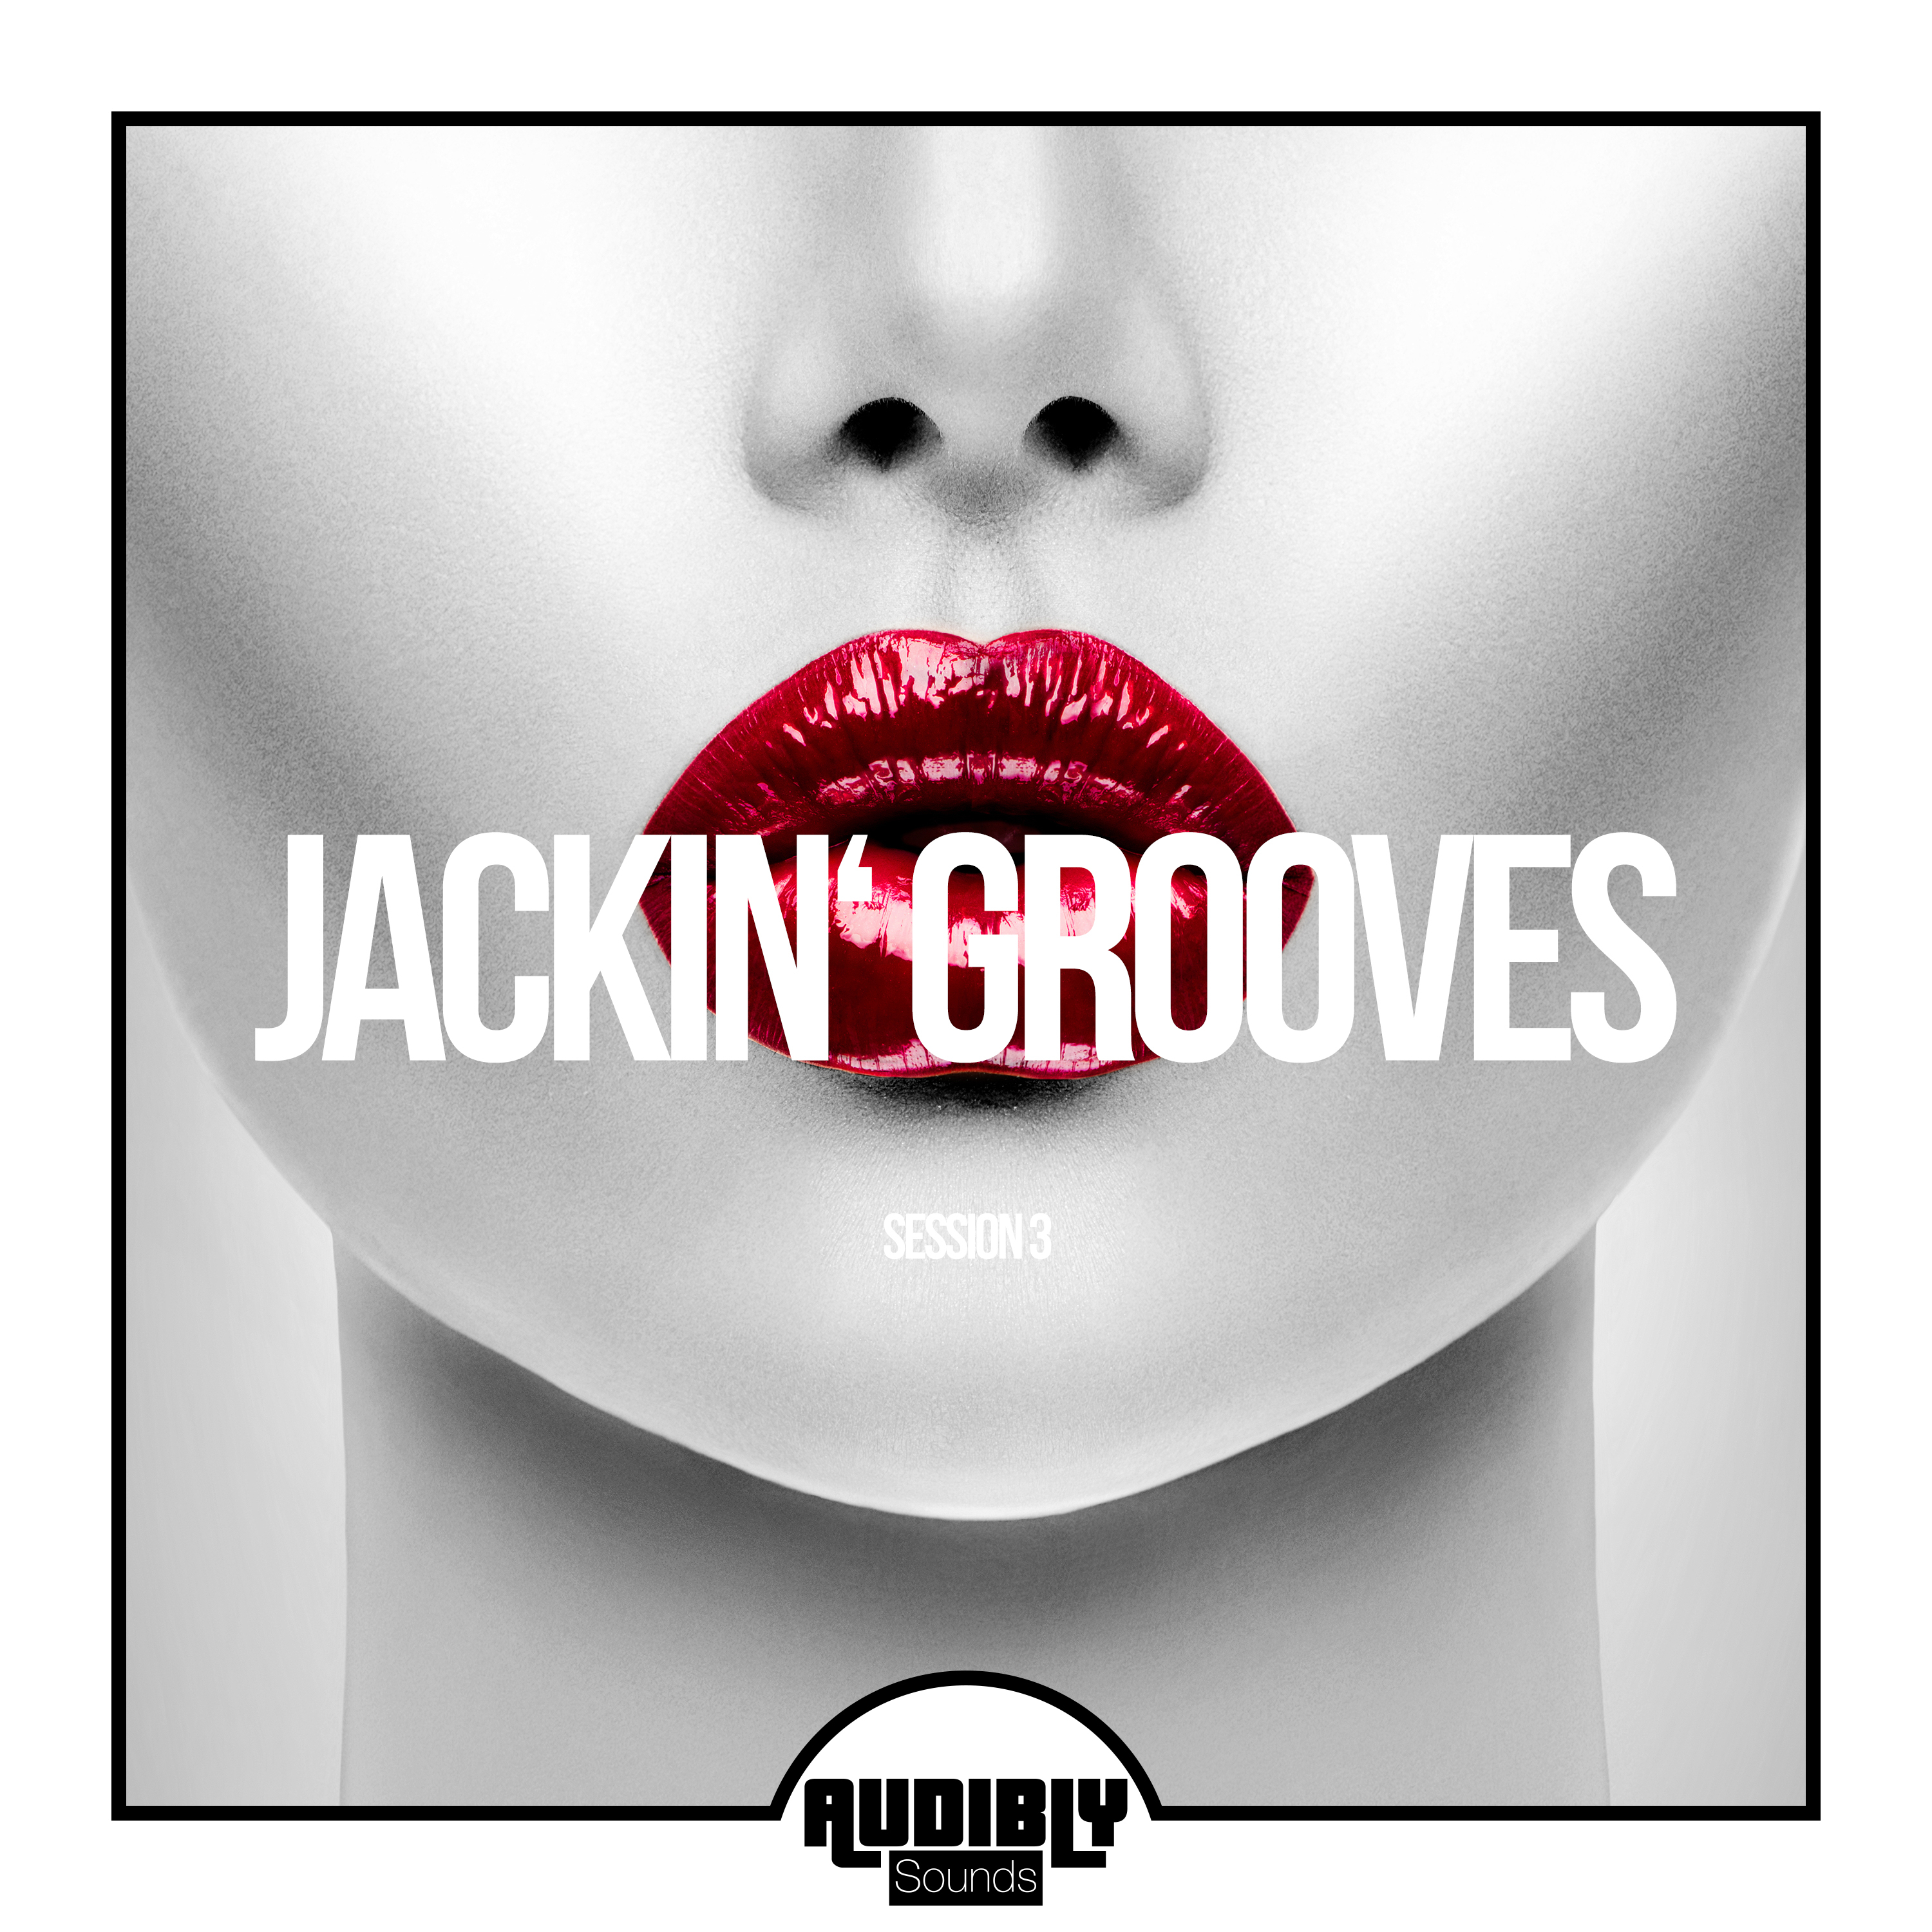 Jackin' Grooves, Session 3